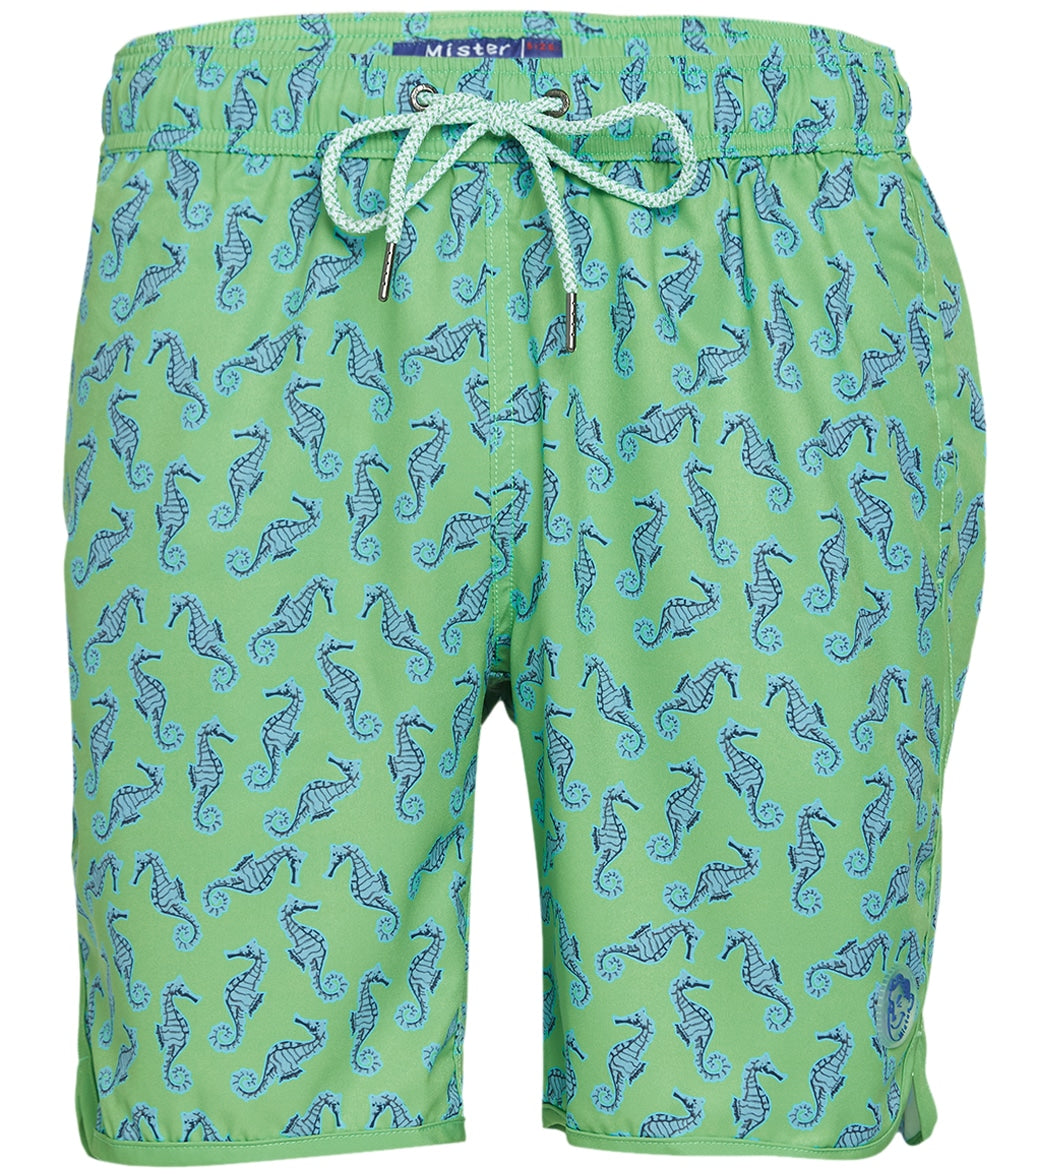 Mr. swim Men's Seahorse Swim Trunk - Lime Green Medium - Swimoutlet.com